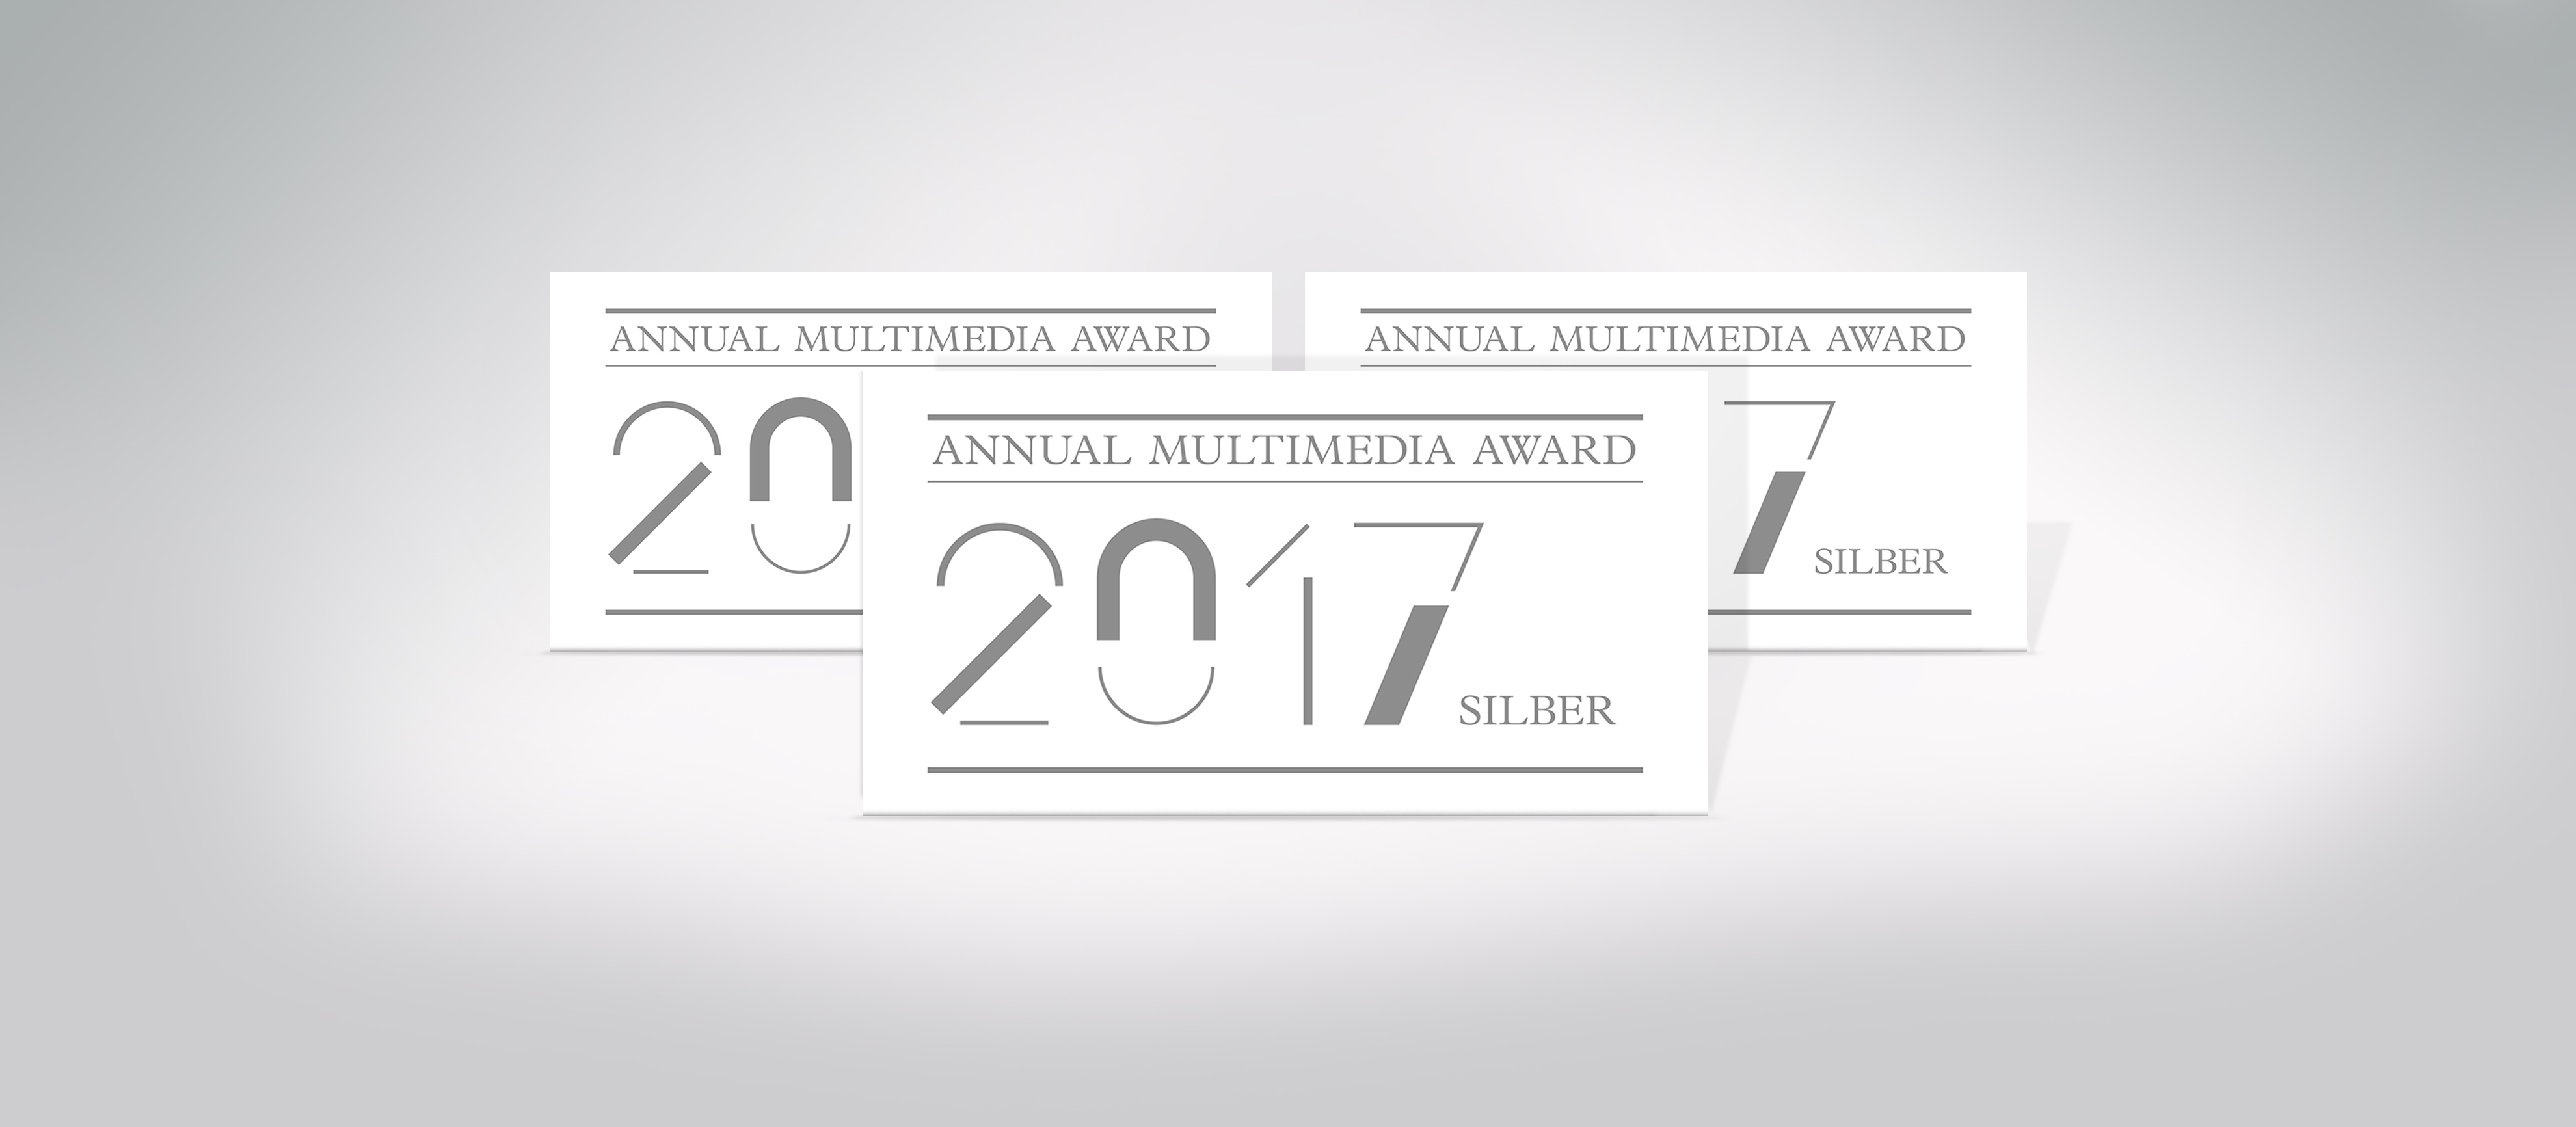 Dreifach Silber beim Annual Multimedia Award 2017